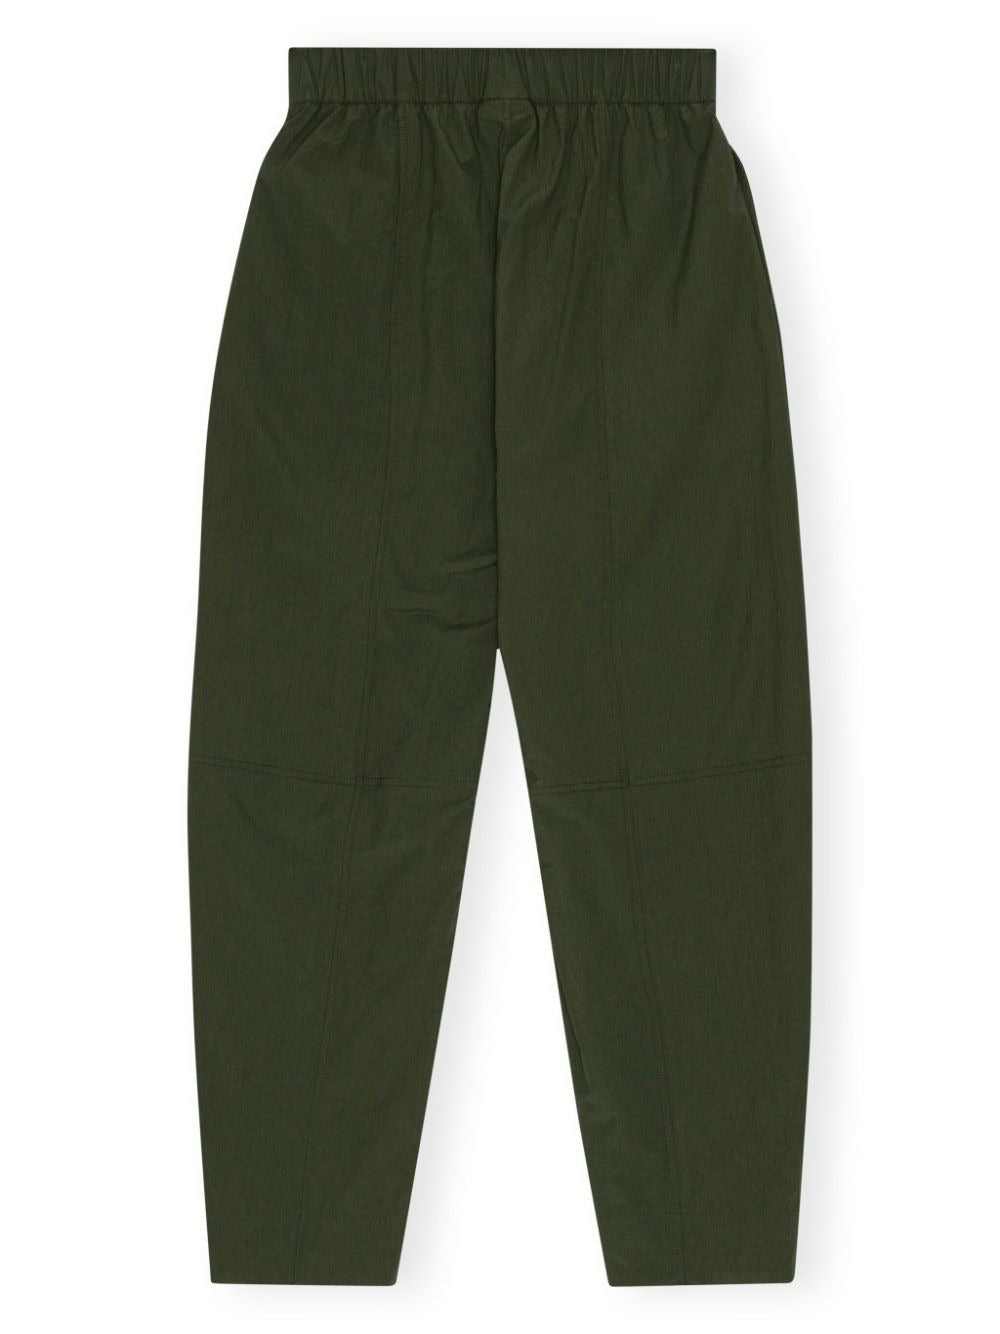 Ganni Cotton Crepe Elasticated Curve Pants in Kombu Green